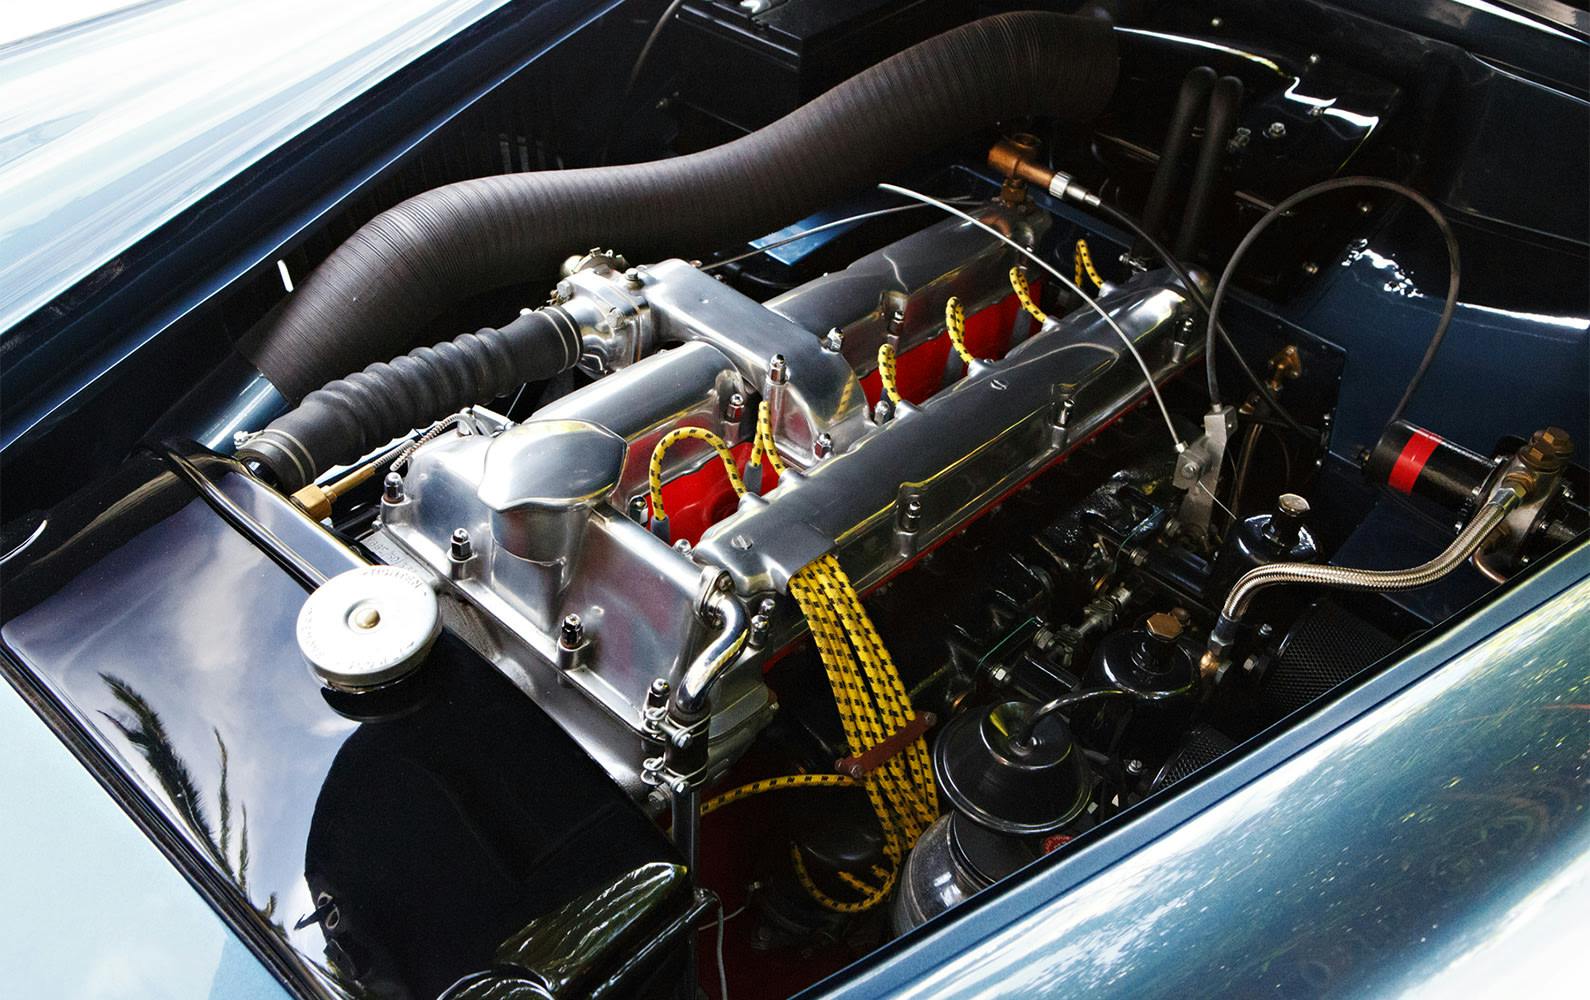 Aston Martin DB2 engine